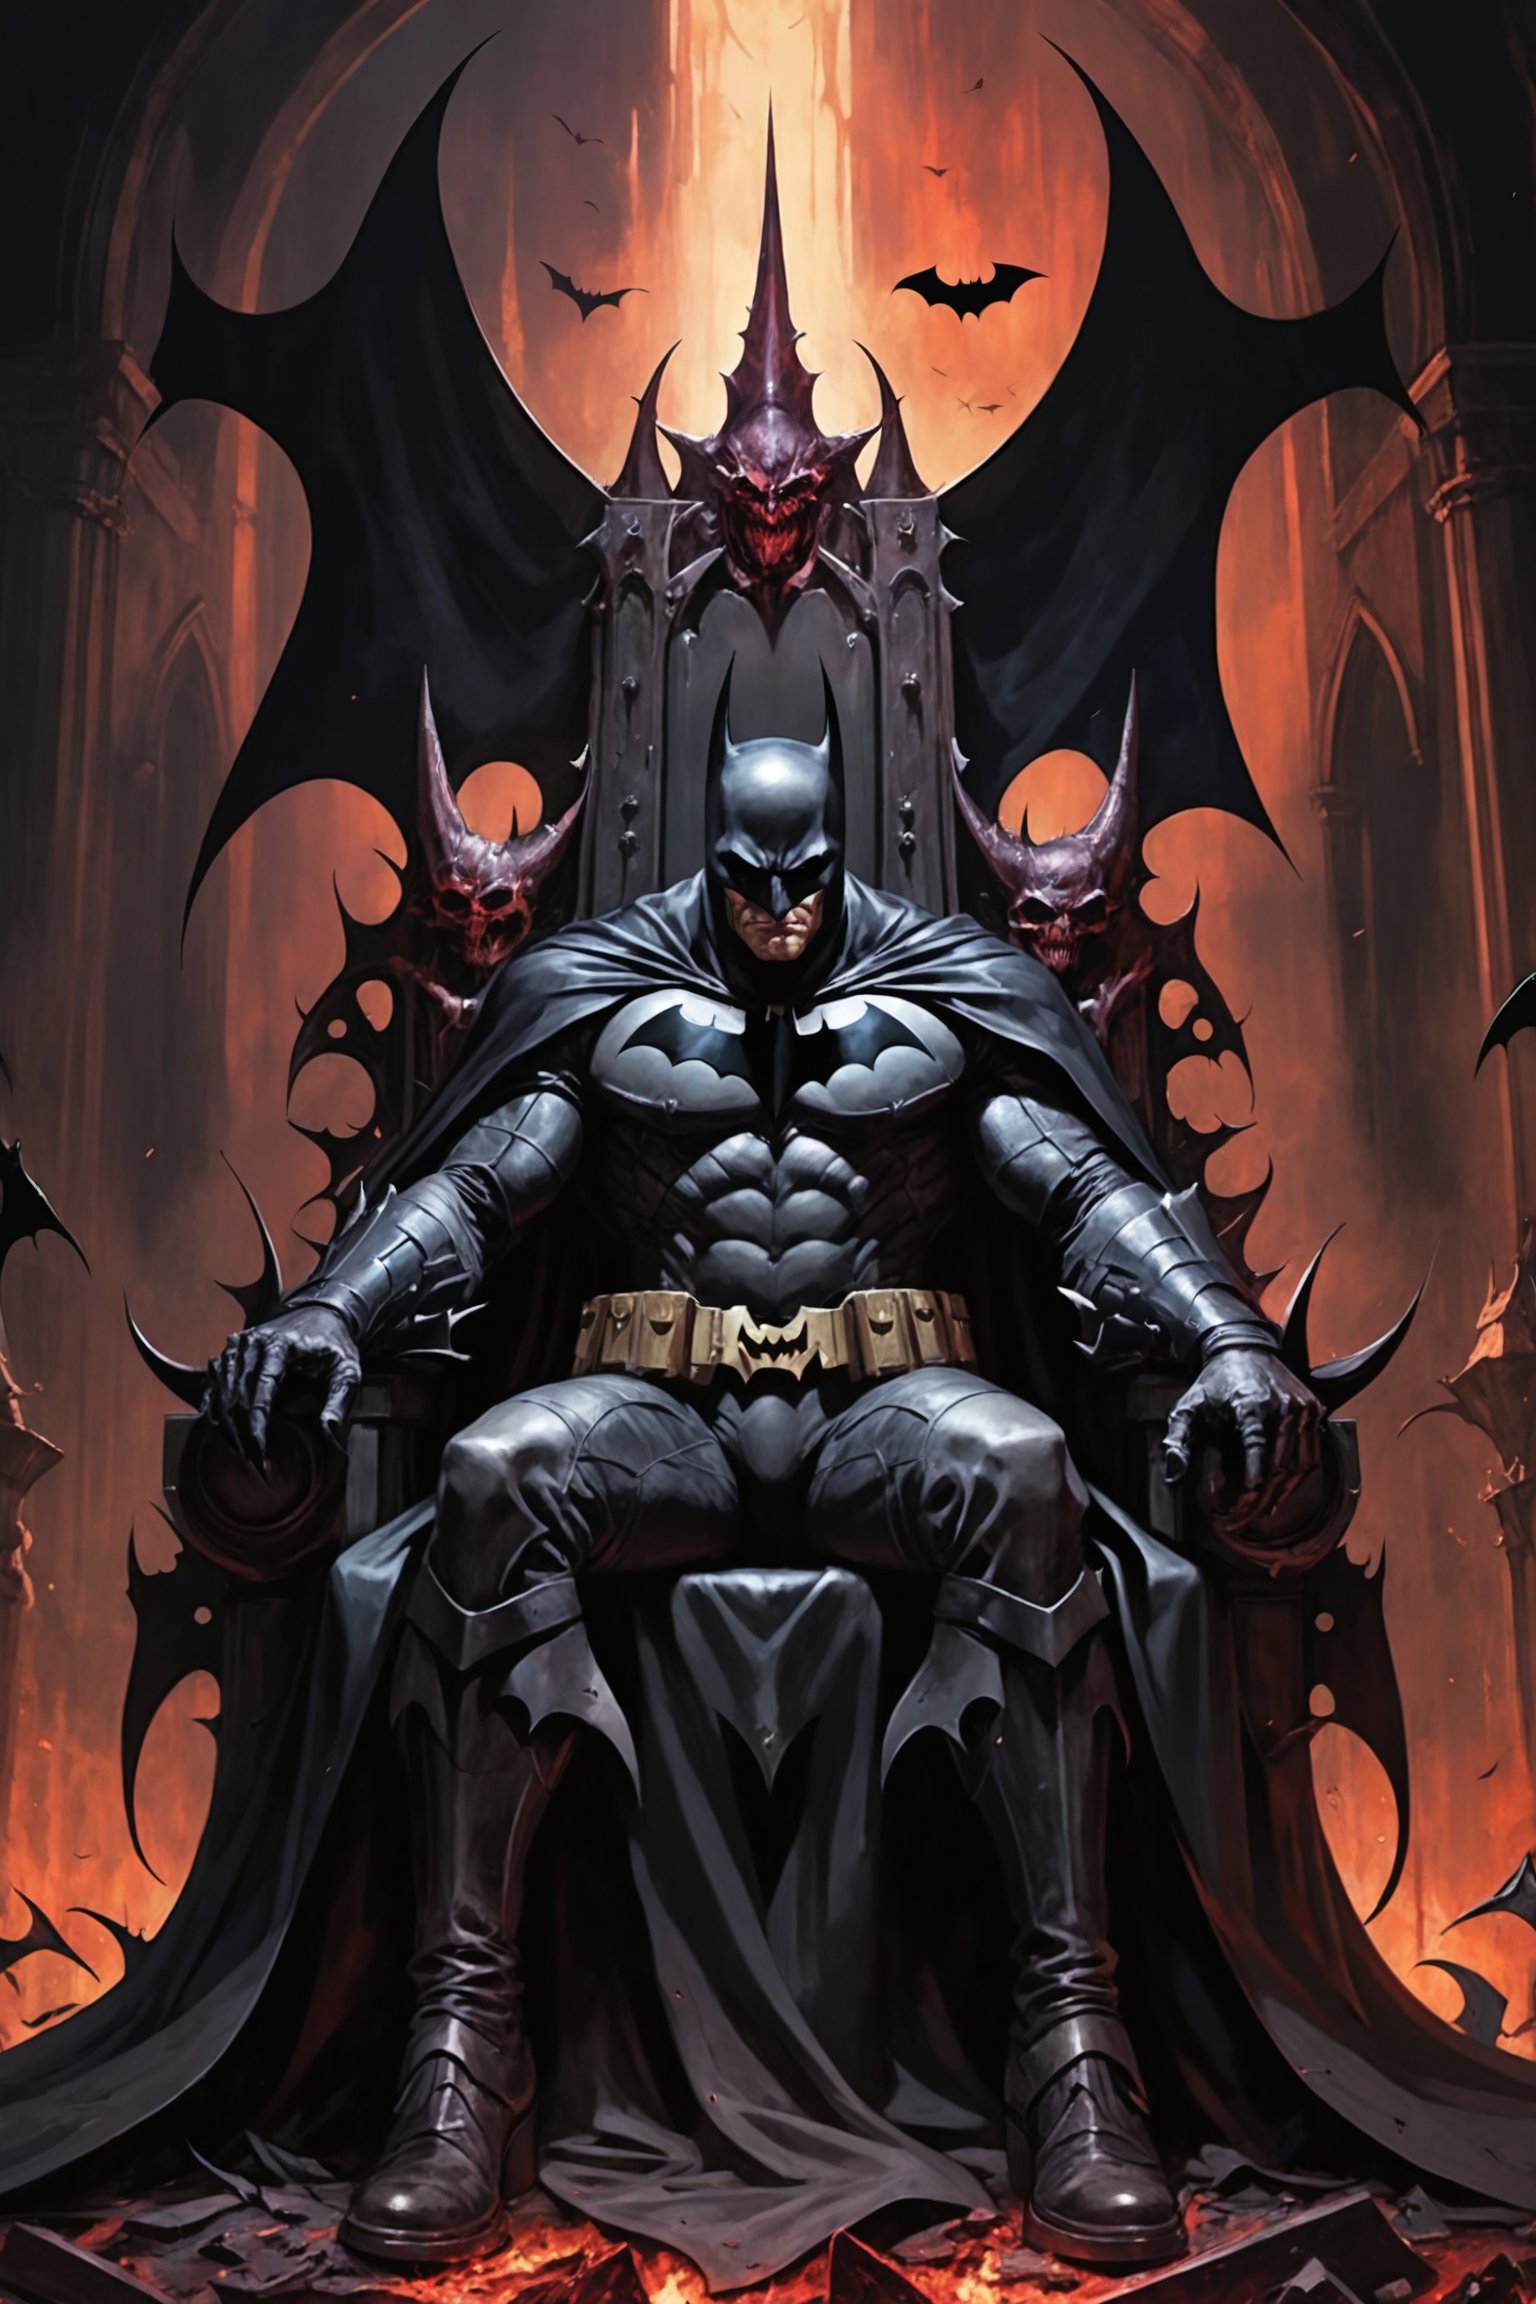 dystopian art, overlord demon batman, villain, evil, wrathful, sitting on a throne